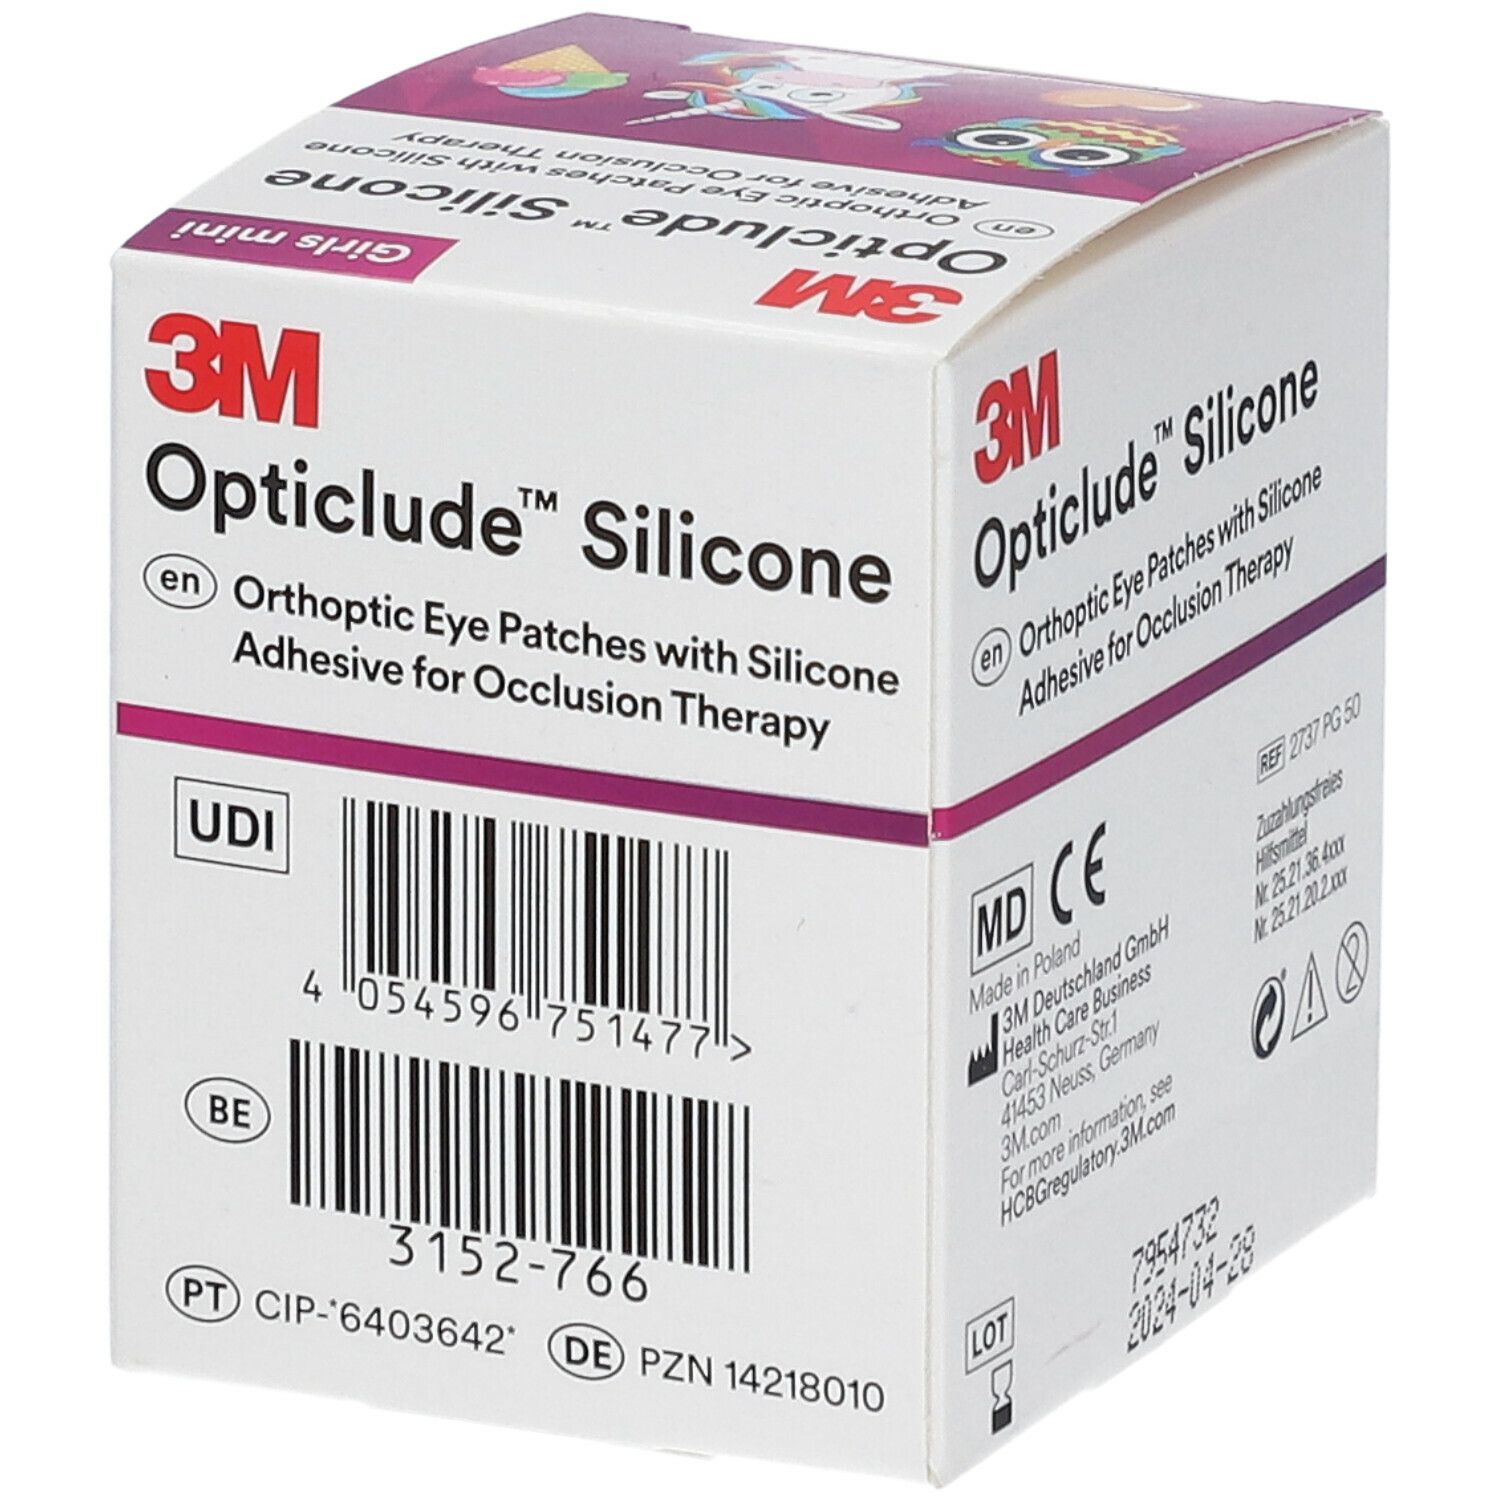 3M Opticlude™ Silicone Girls mini Augenpflaster 5 x 6 cm